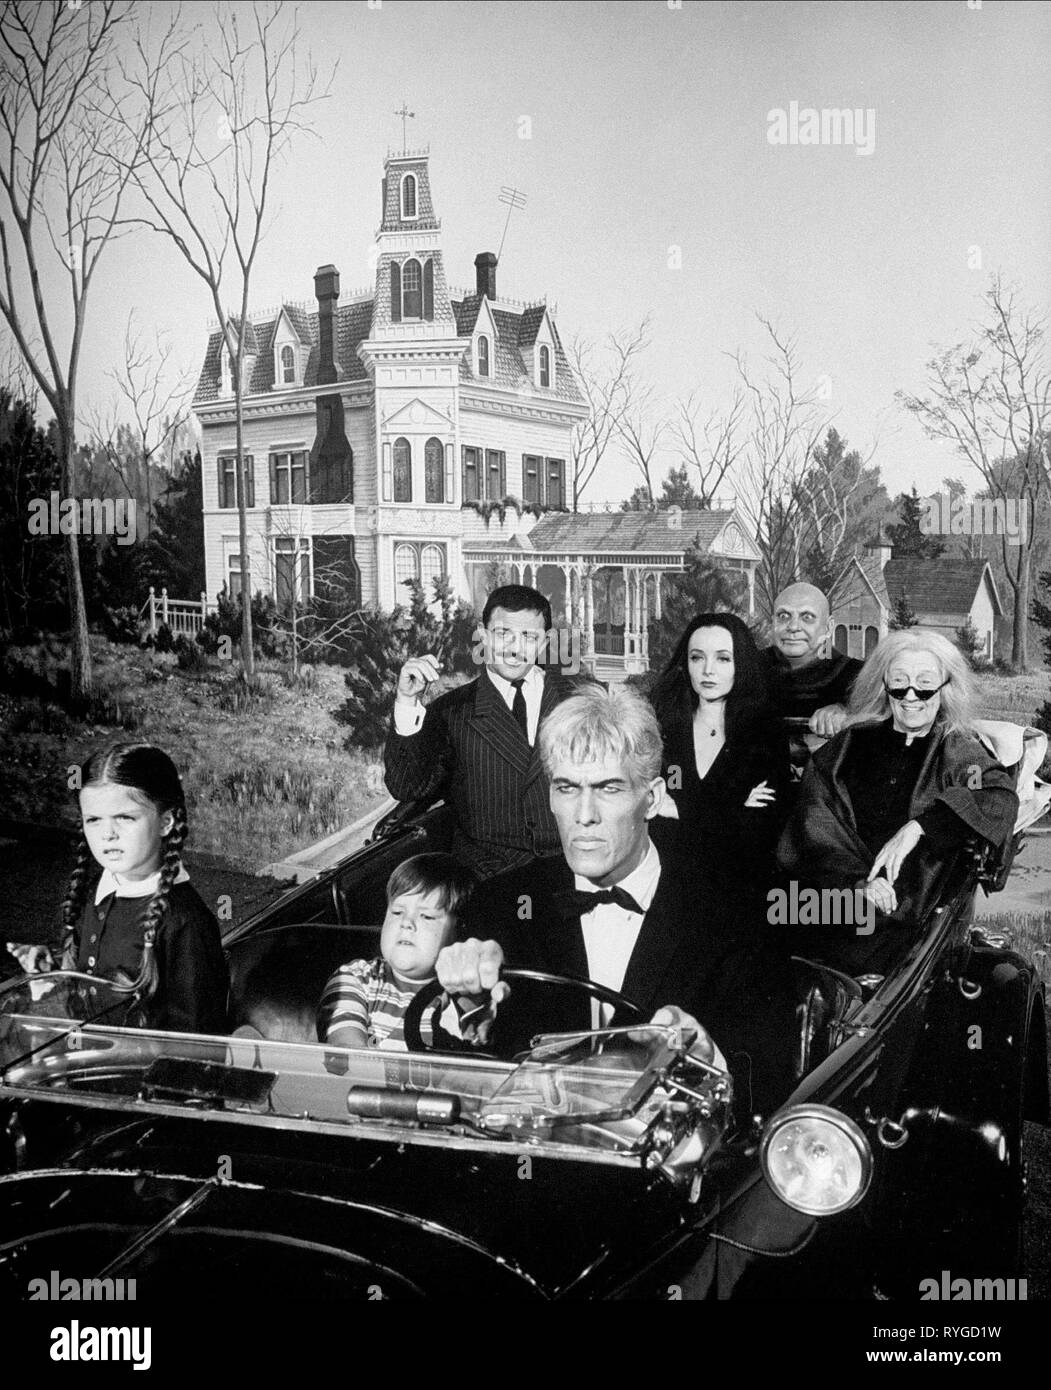 LISA LORING, JOHN ASTIN, KEN WEATHERWAX, TED CASSIDY, CAROLYN JONES, JACKIE COOGAN, MARIE BLAKE, THE ADDAMS FAMILY, 1964 Stock Photo